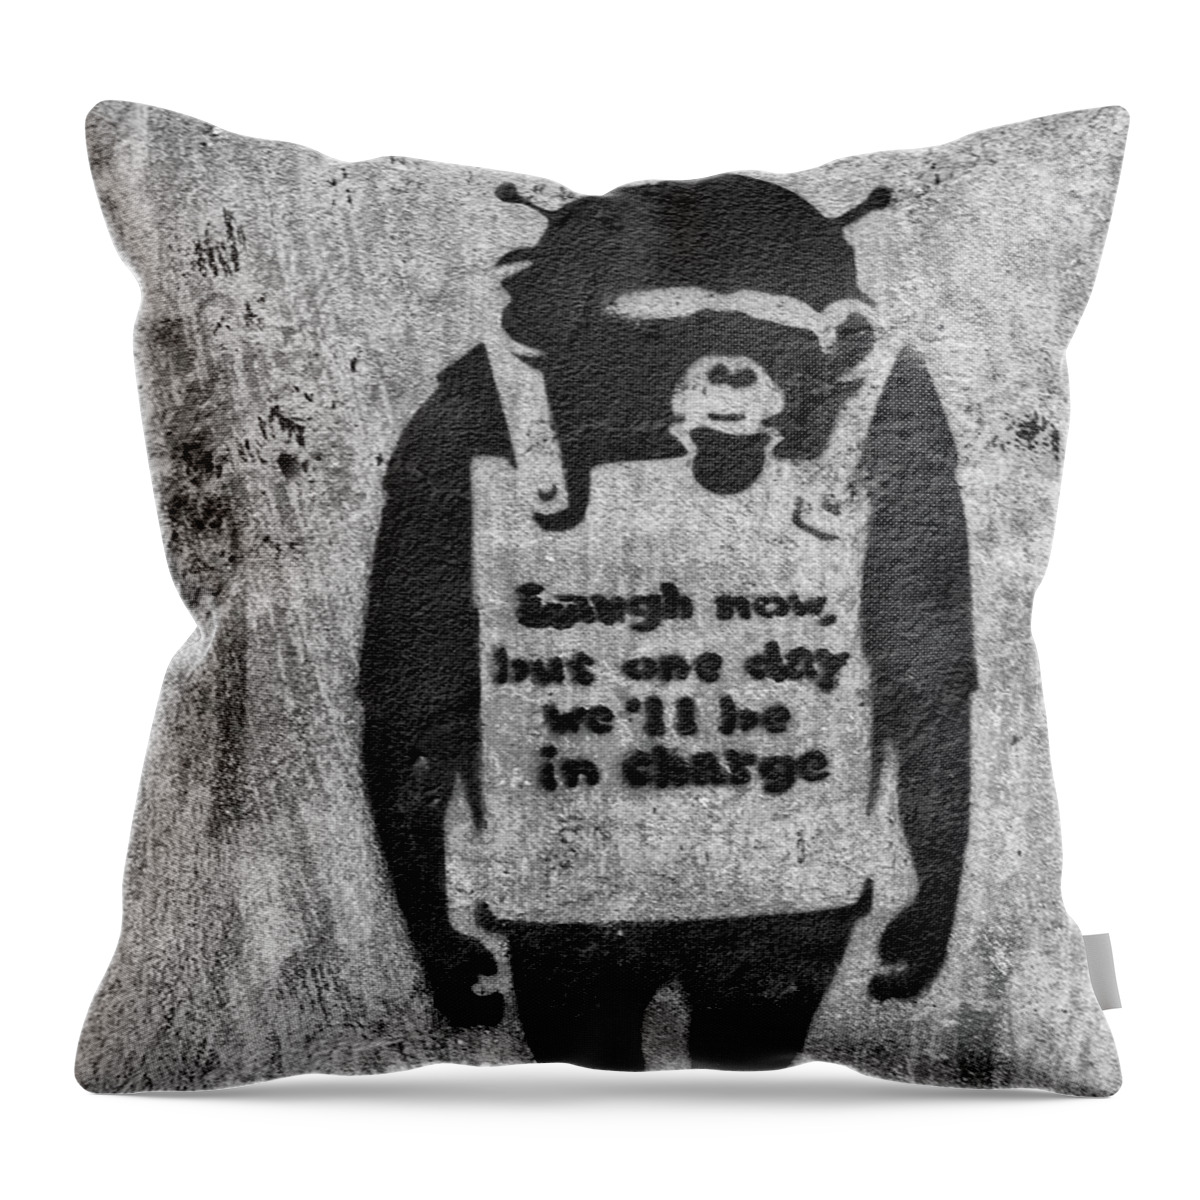 Banksy Throw Pillow featuring the photograph Banksy Chimp Laugh Now Graffiti by Gigi Ebert